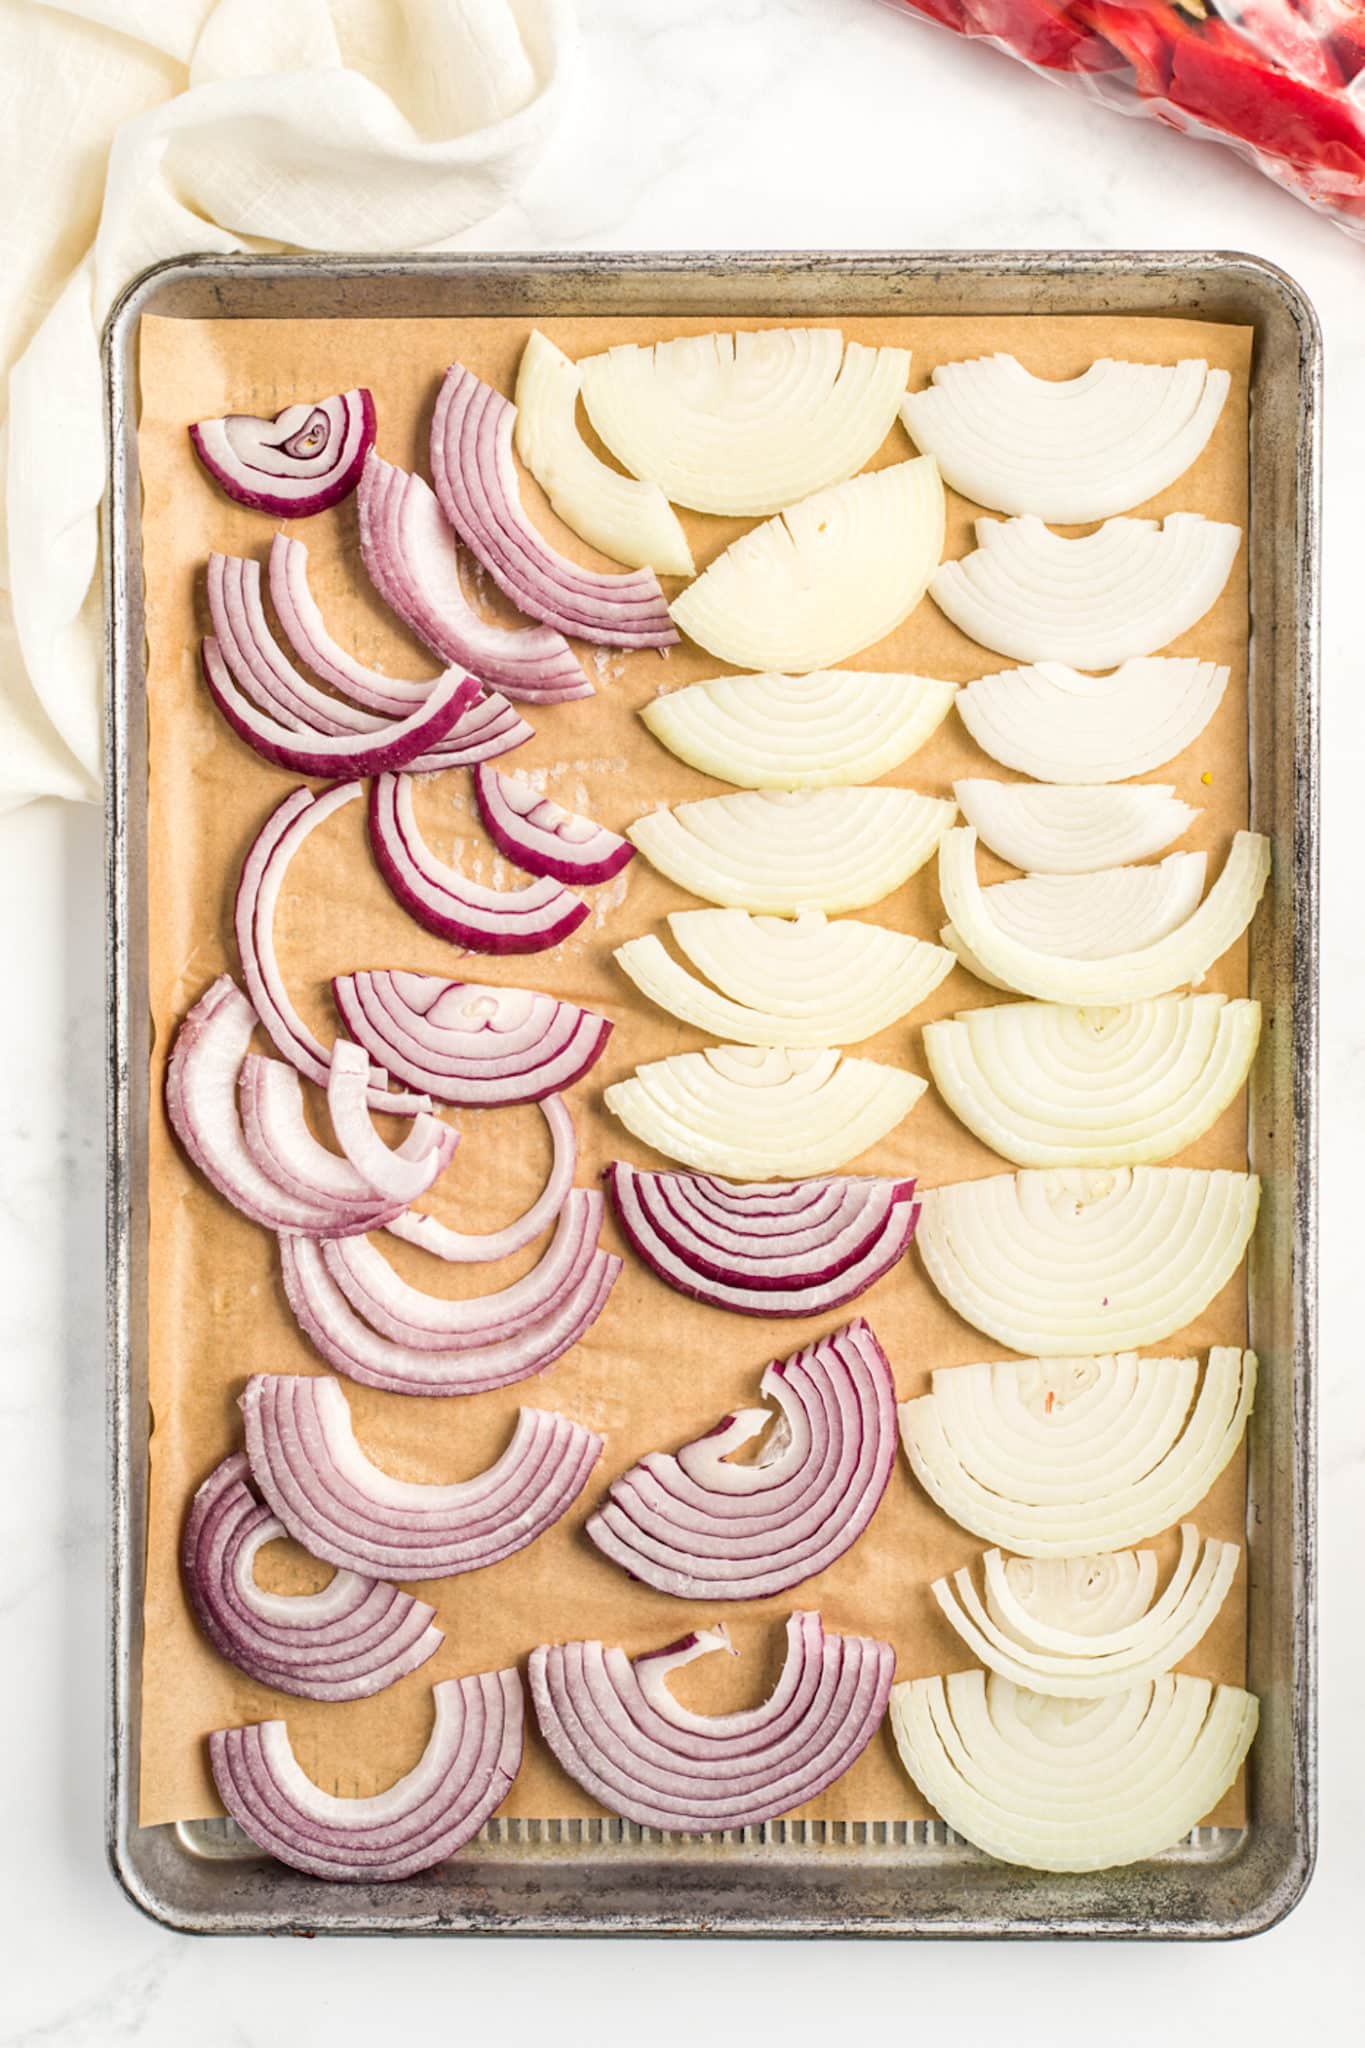 5 Easy Ways To Freeze Onions